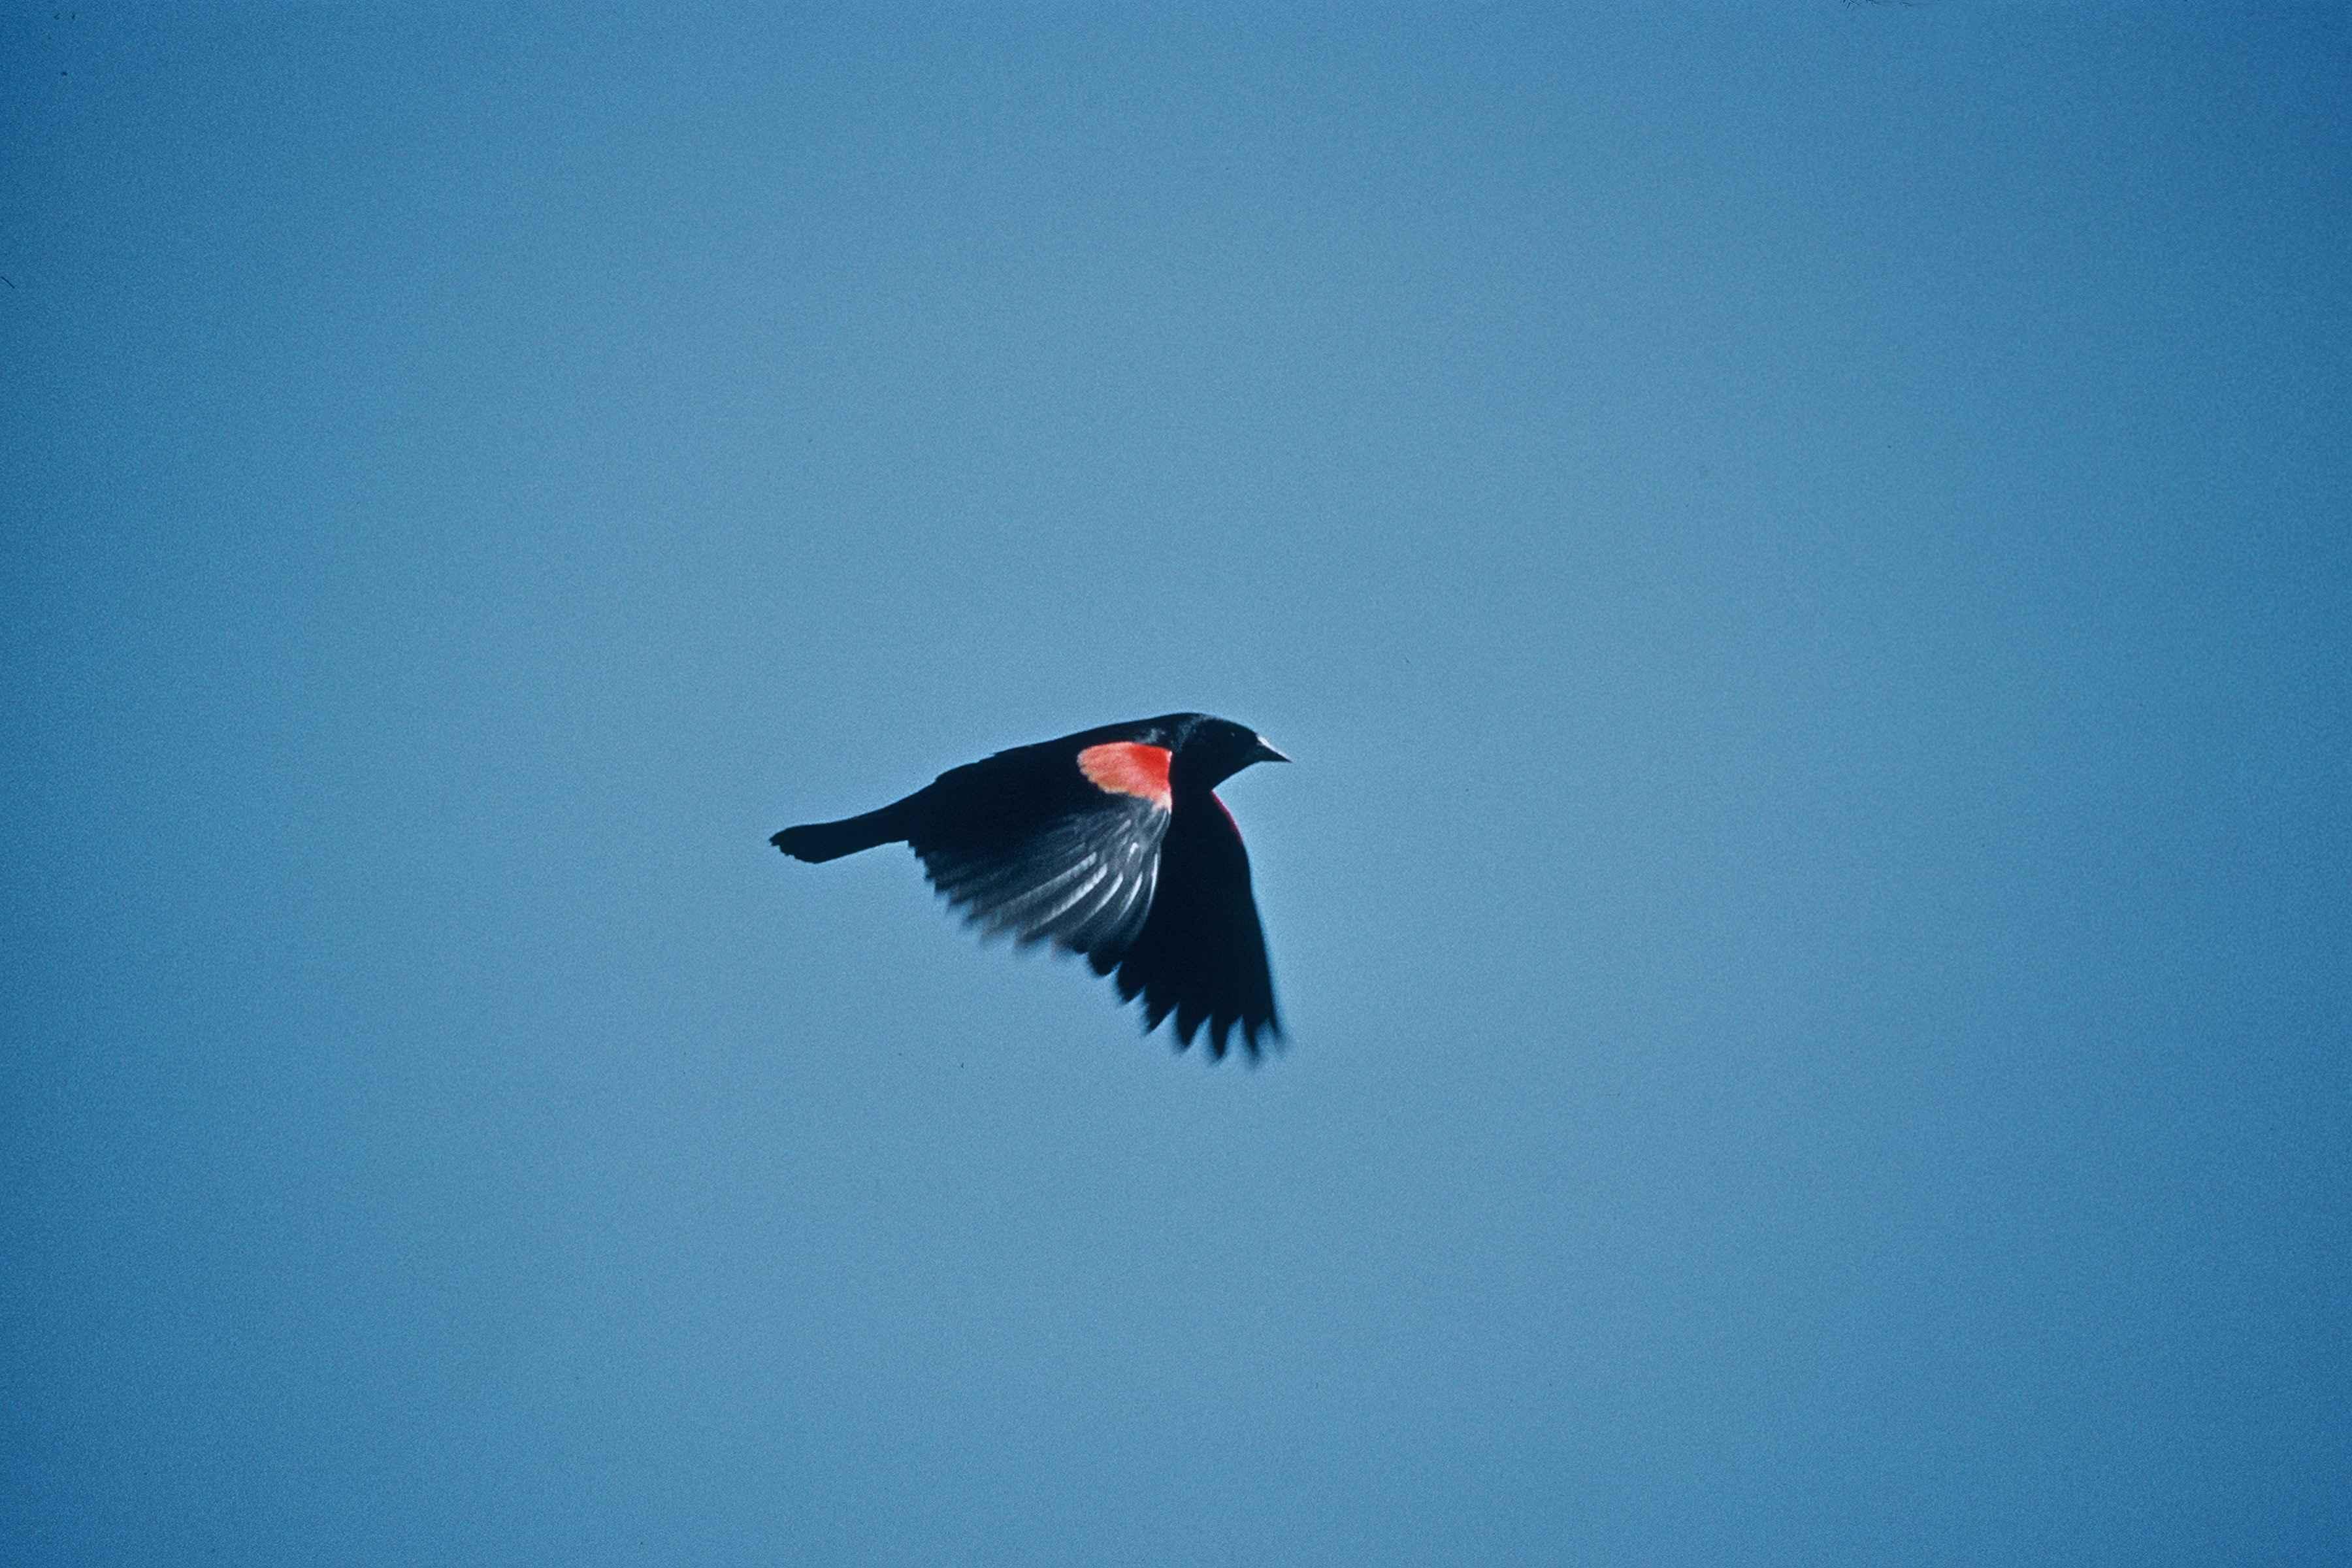 Red winged blackbird free image, public domain image